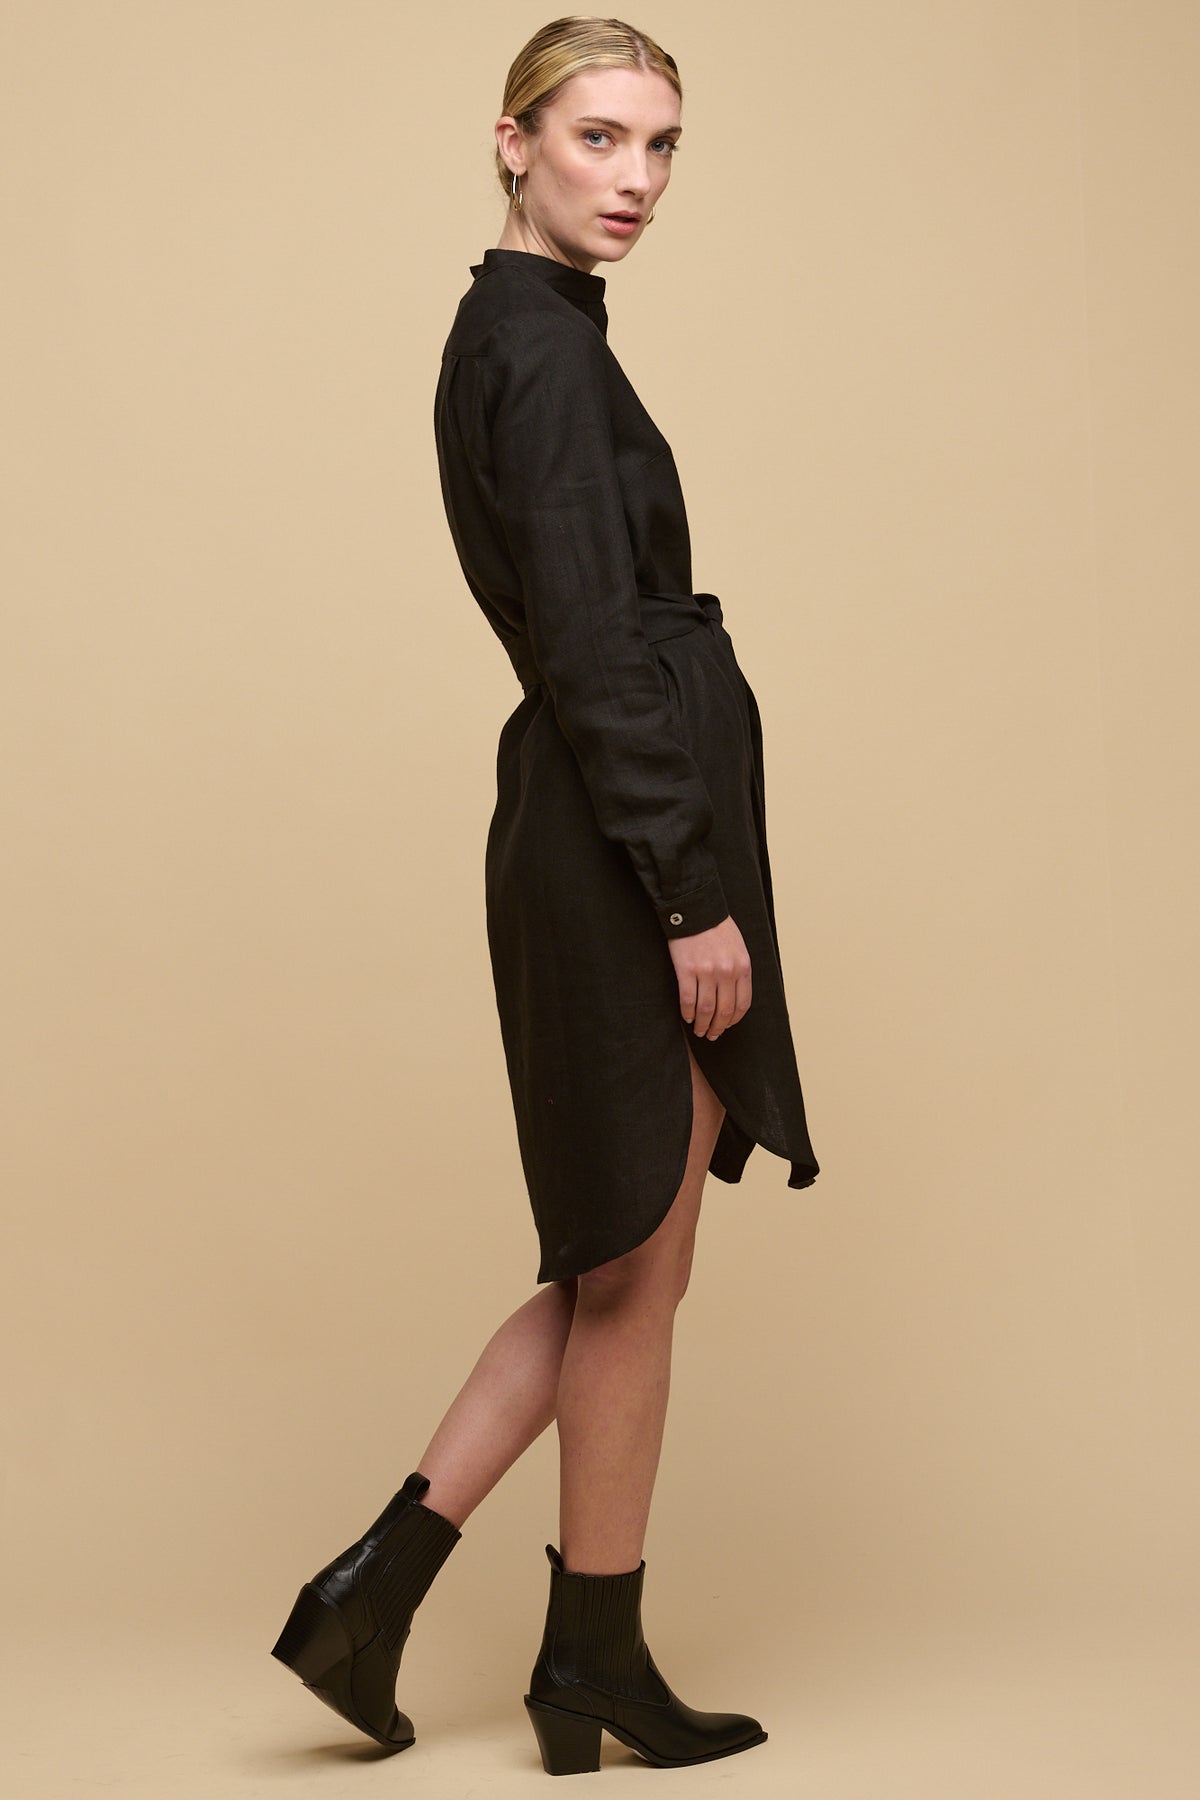 
            Full body side view of female wearing black linen collarless shirt dress